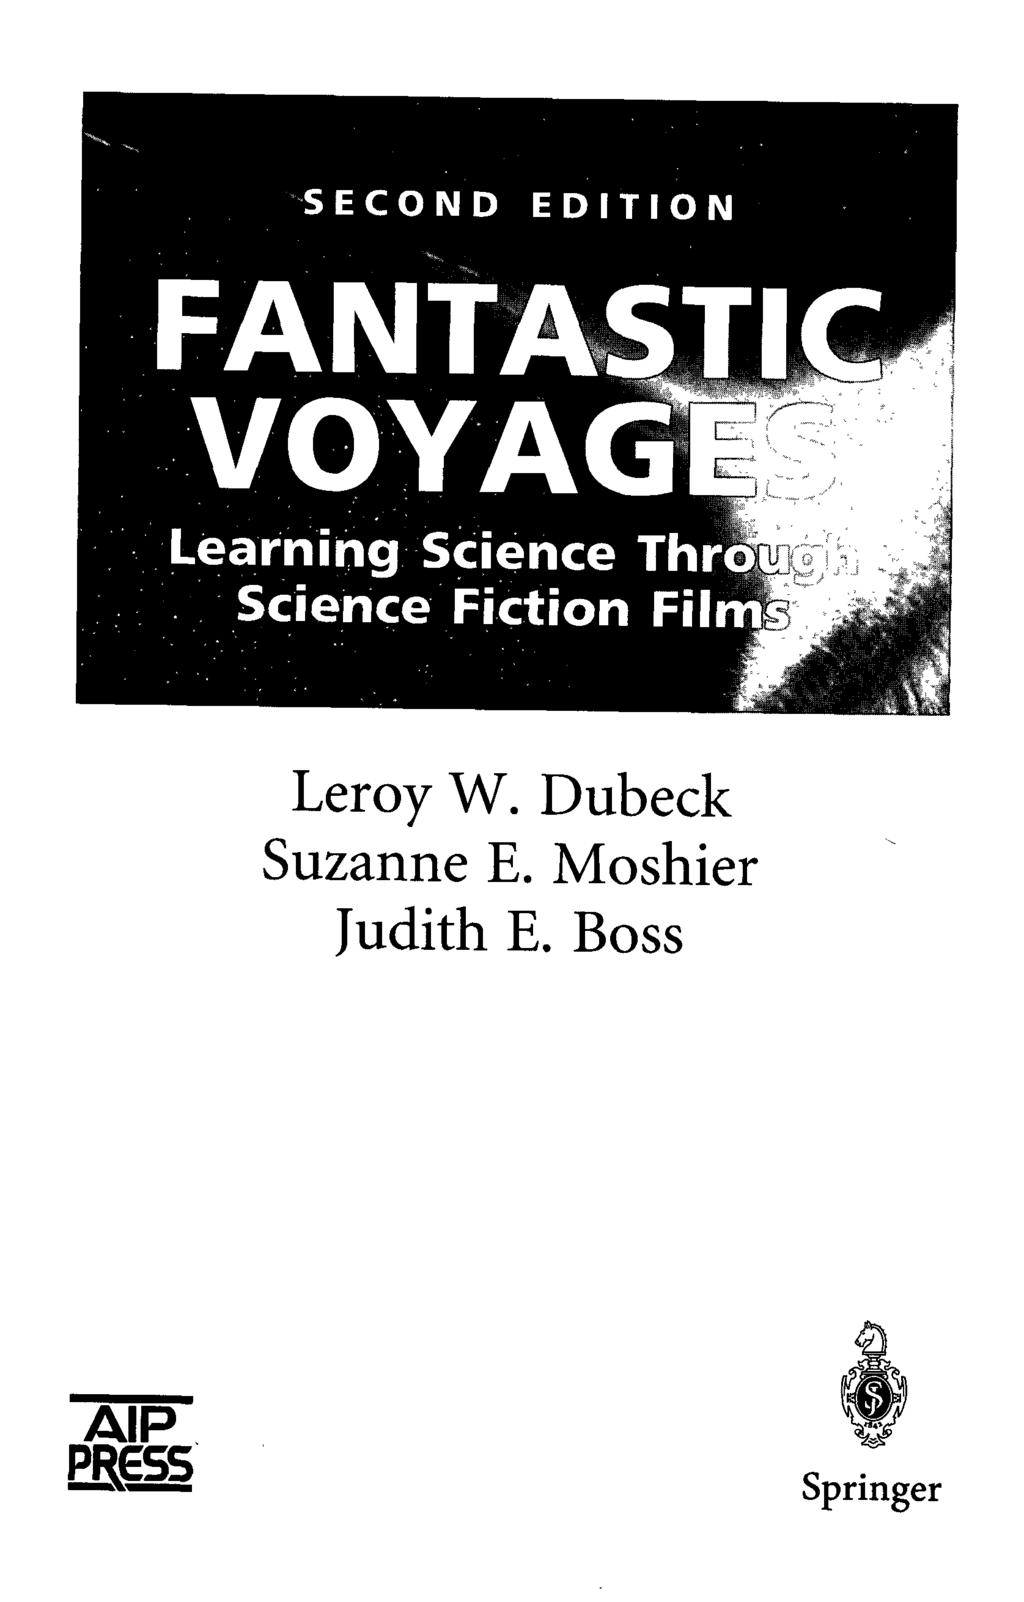 SECOND EDITION FANTASTI VOYAG Learning Science Thrl Science Fiction